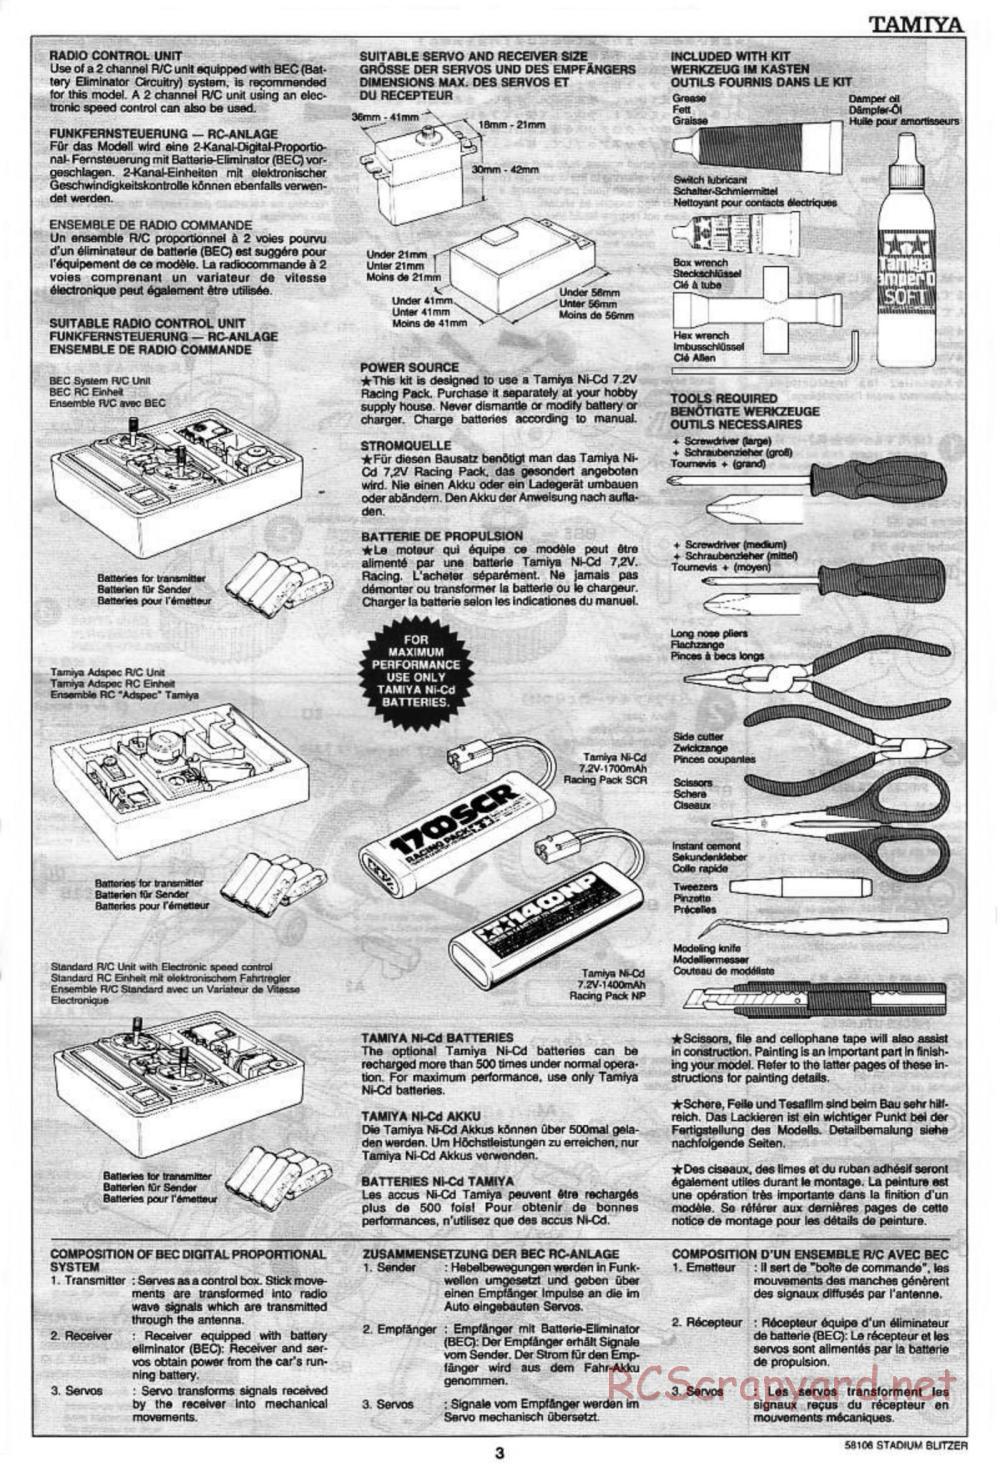 Tamiya - Stadium Blitzer Chassis - Manual - Page 3